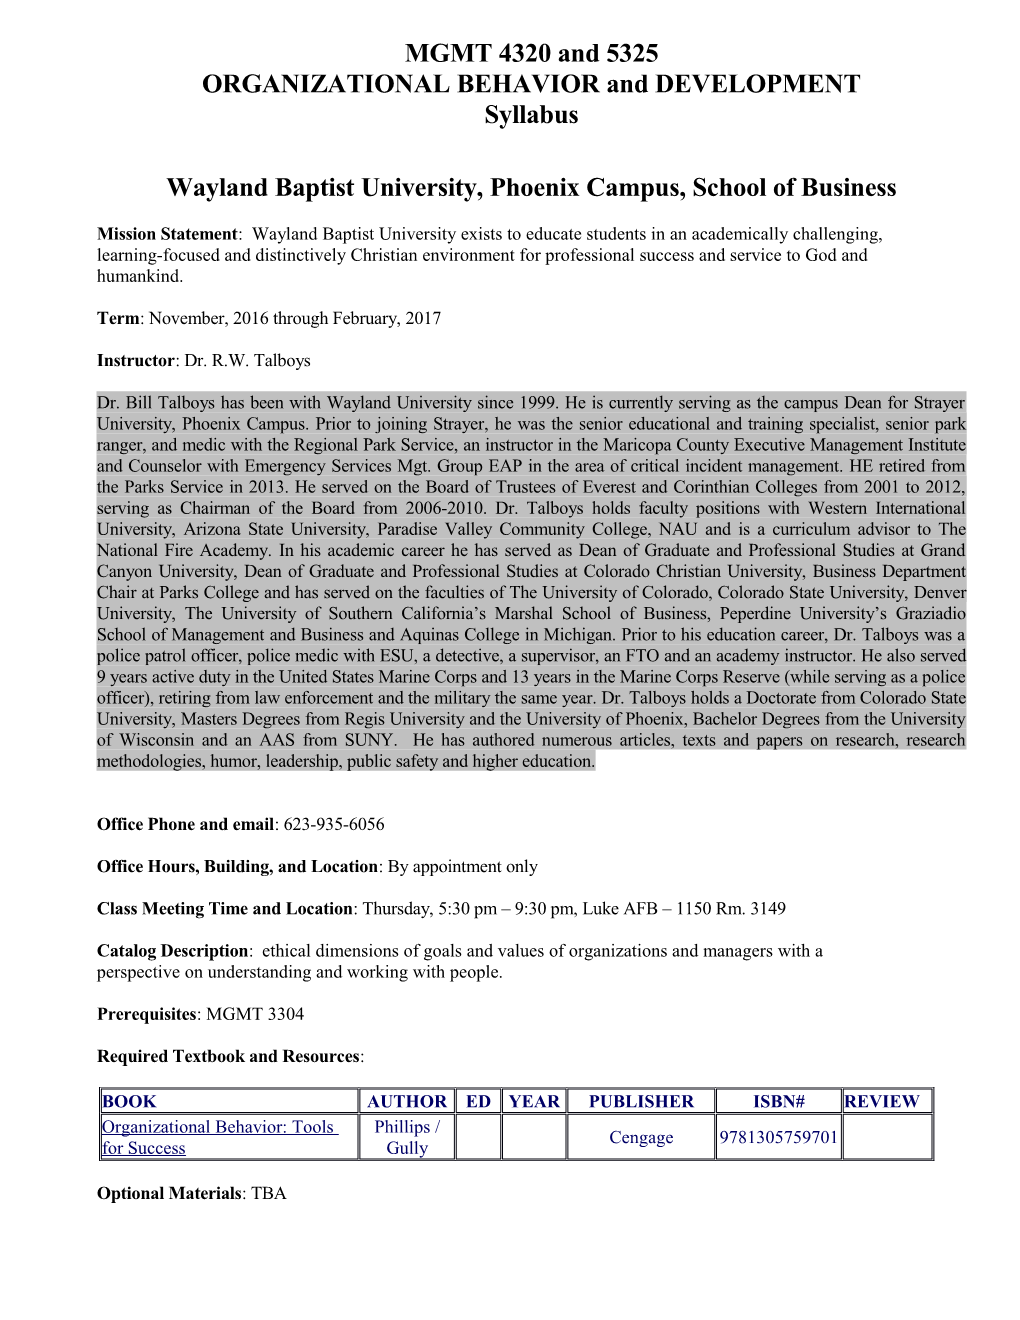 Wayland Baptist University s6